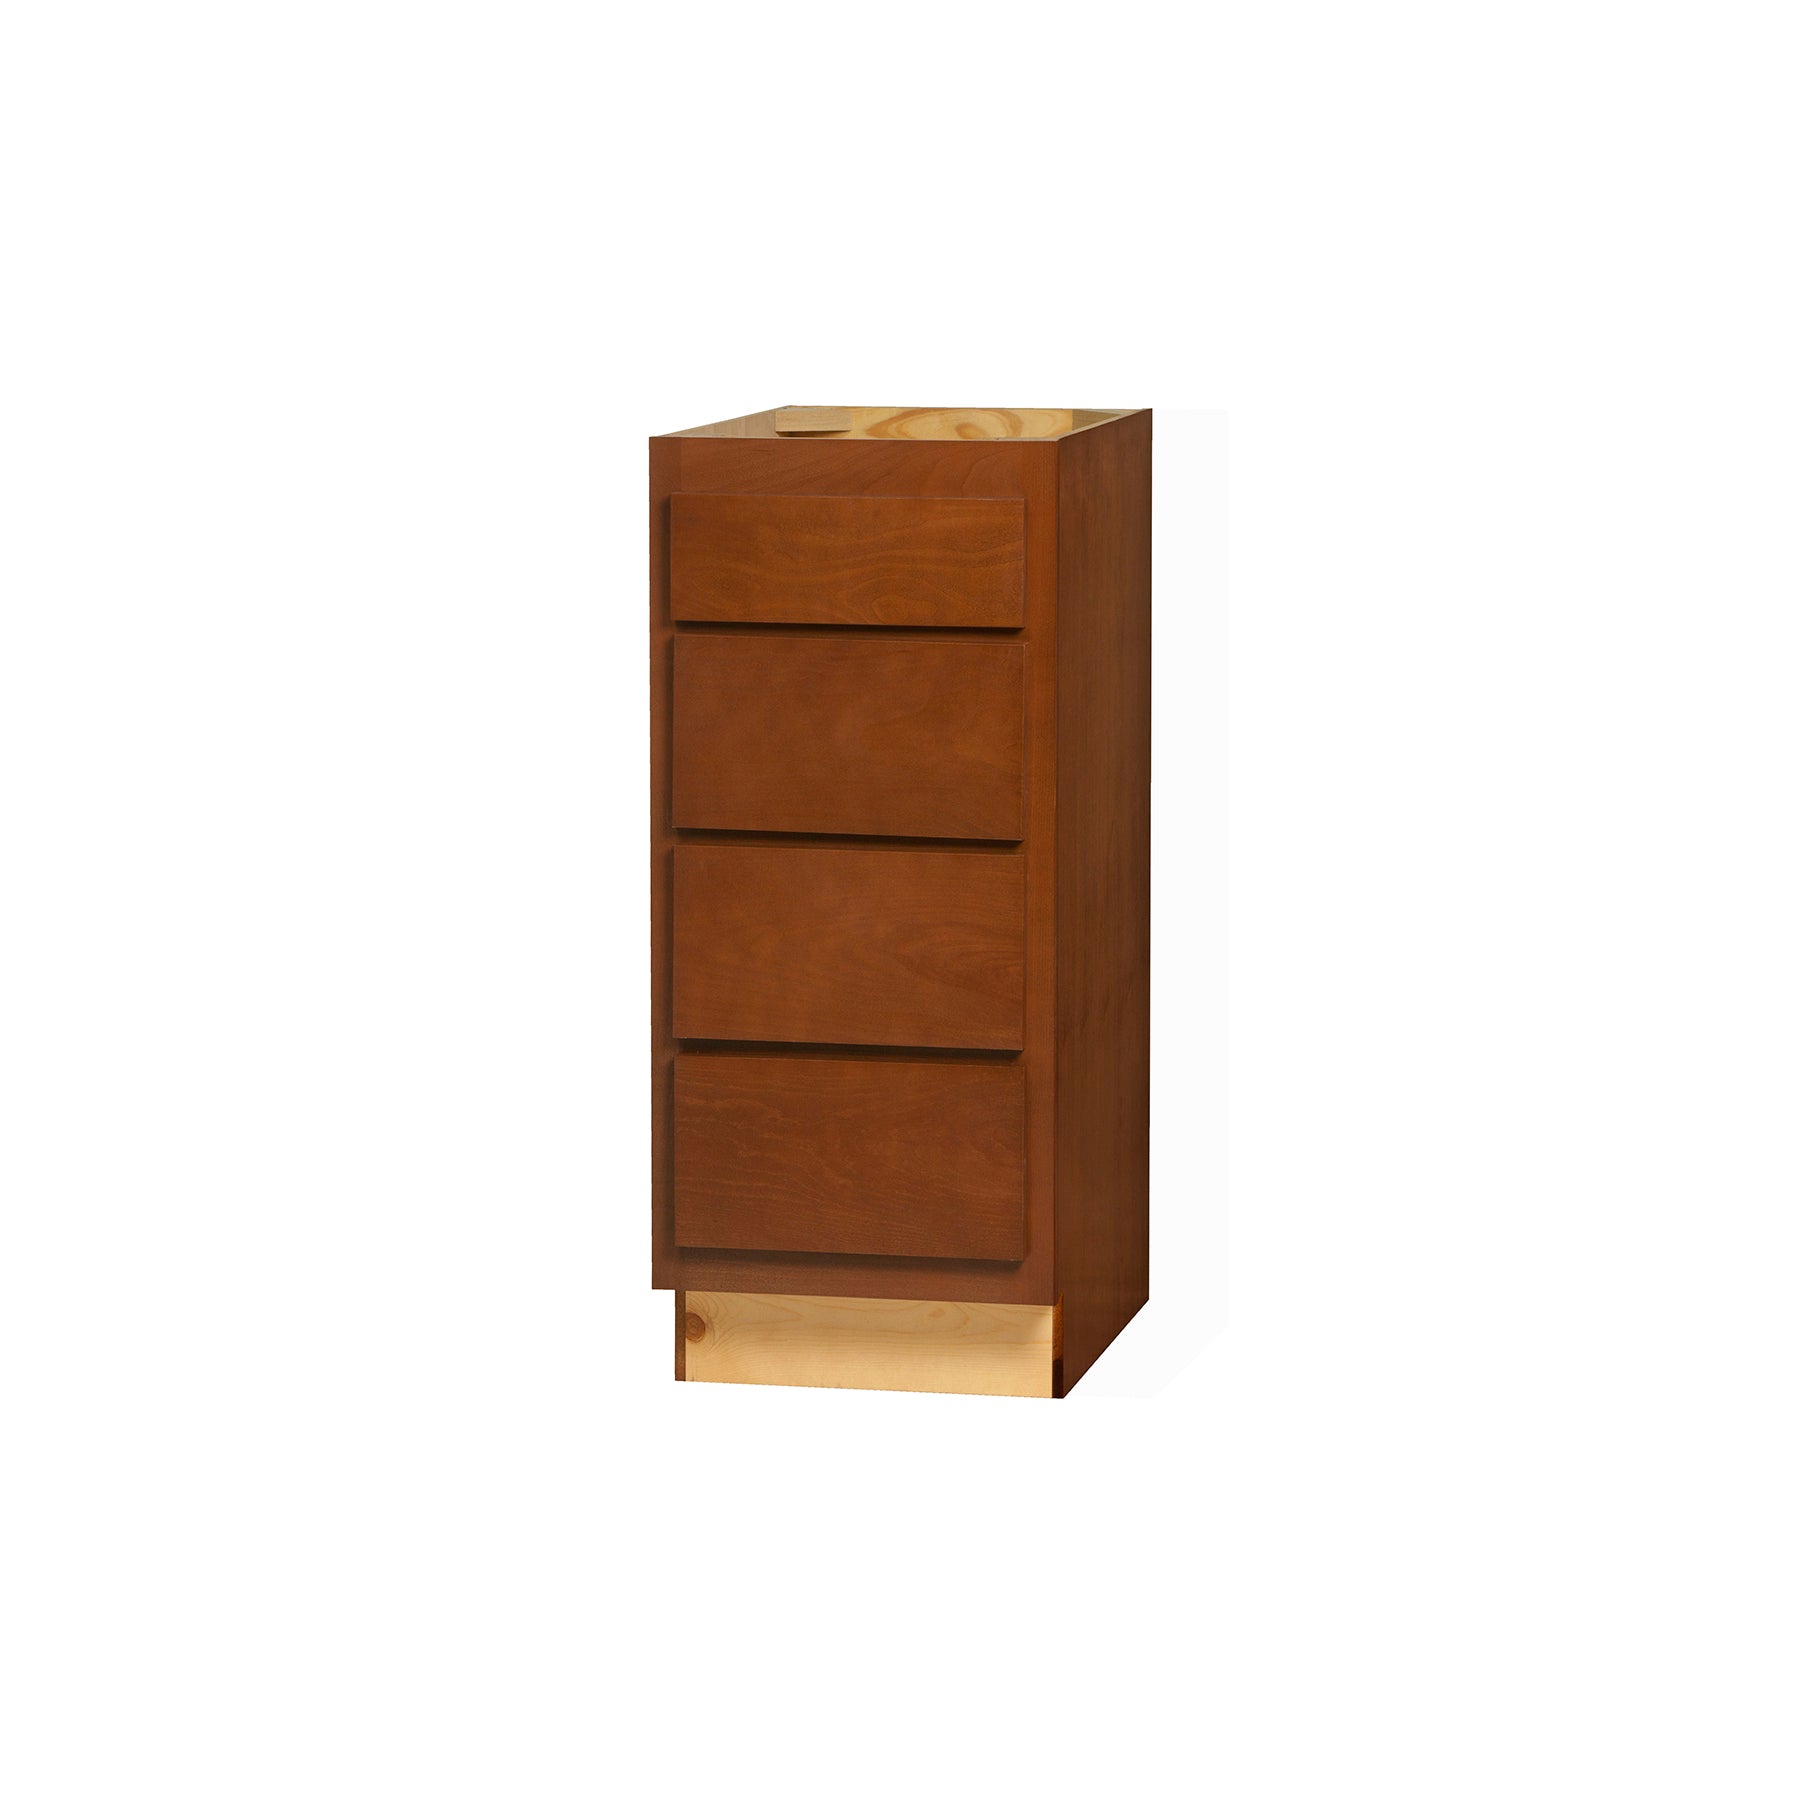 4 Drawer Cabinet - Glenwood Shaker - 15 Inch W x 34.5 Inch H x 24 Inch D